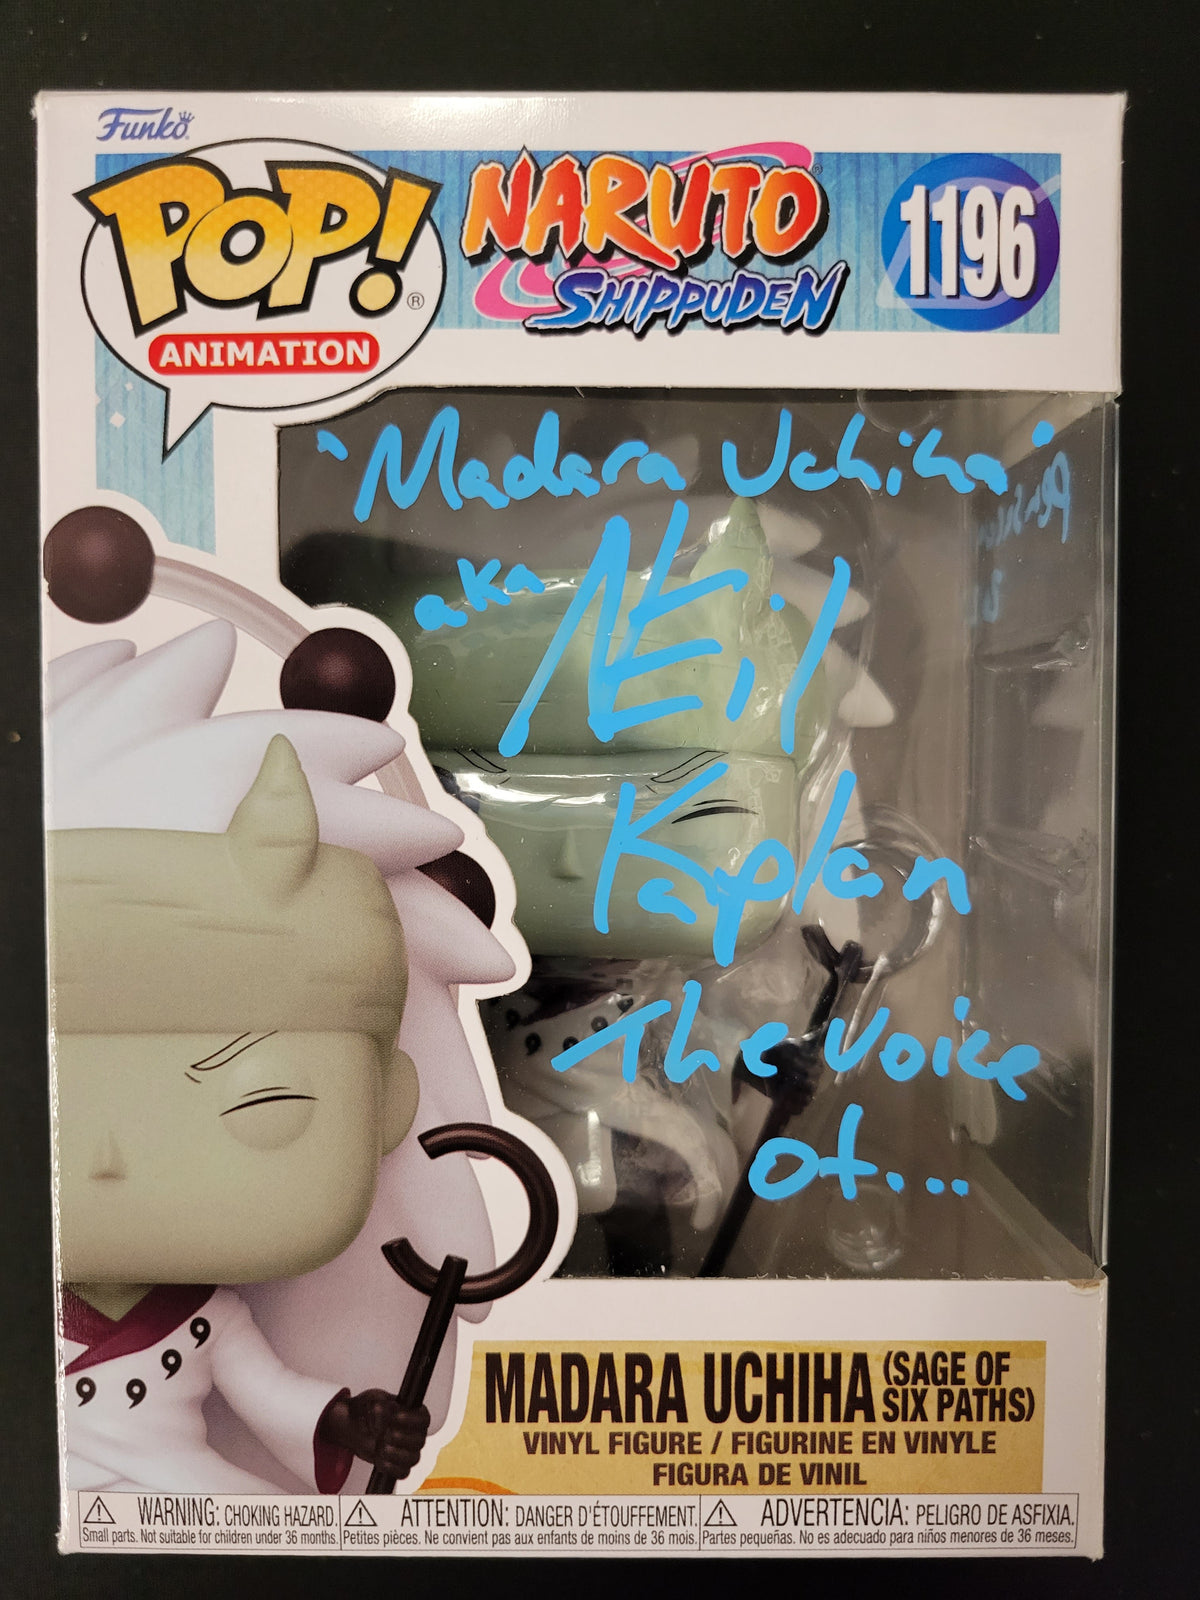 Funko Pop: #1196 Madara Uchiha From Naruto Signed By Neil Kaplan - JSA Cert 512